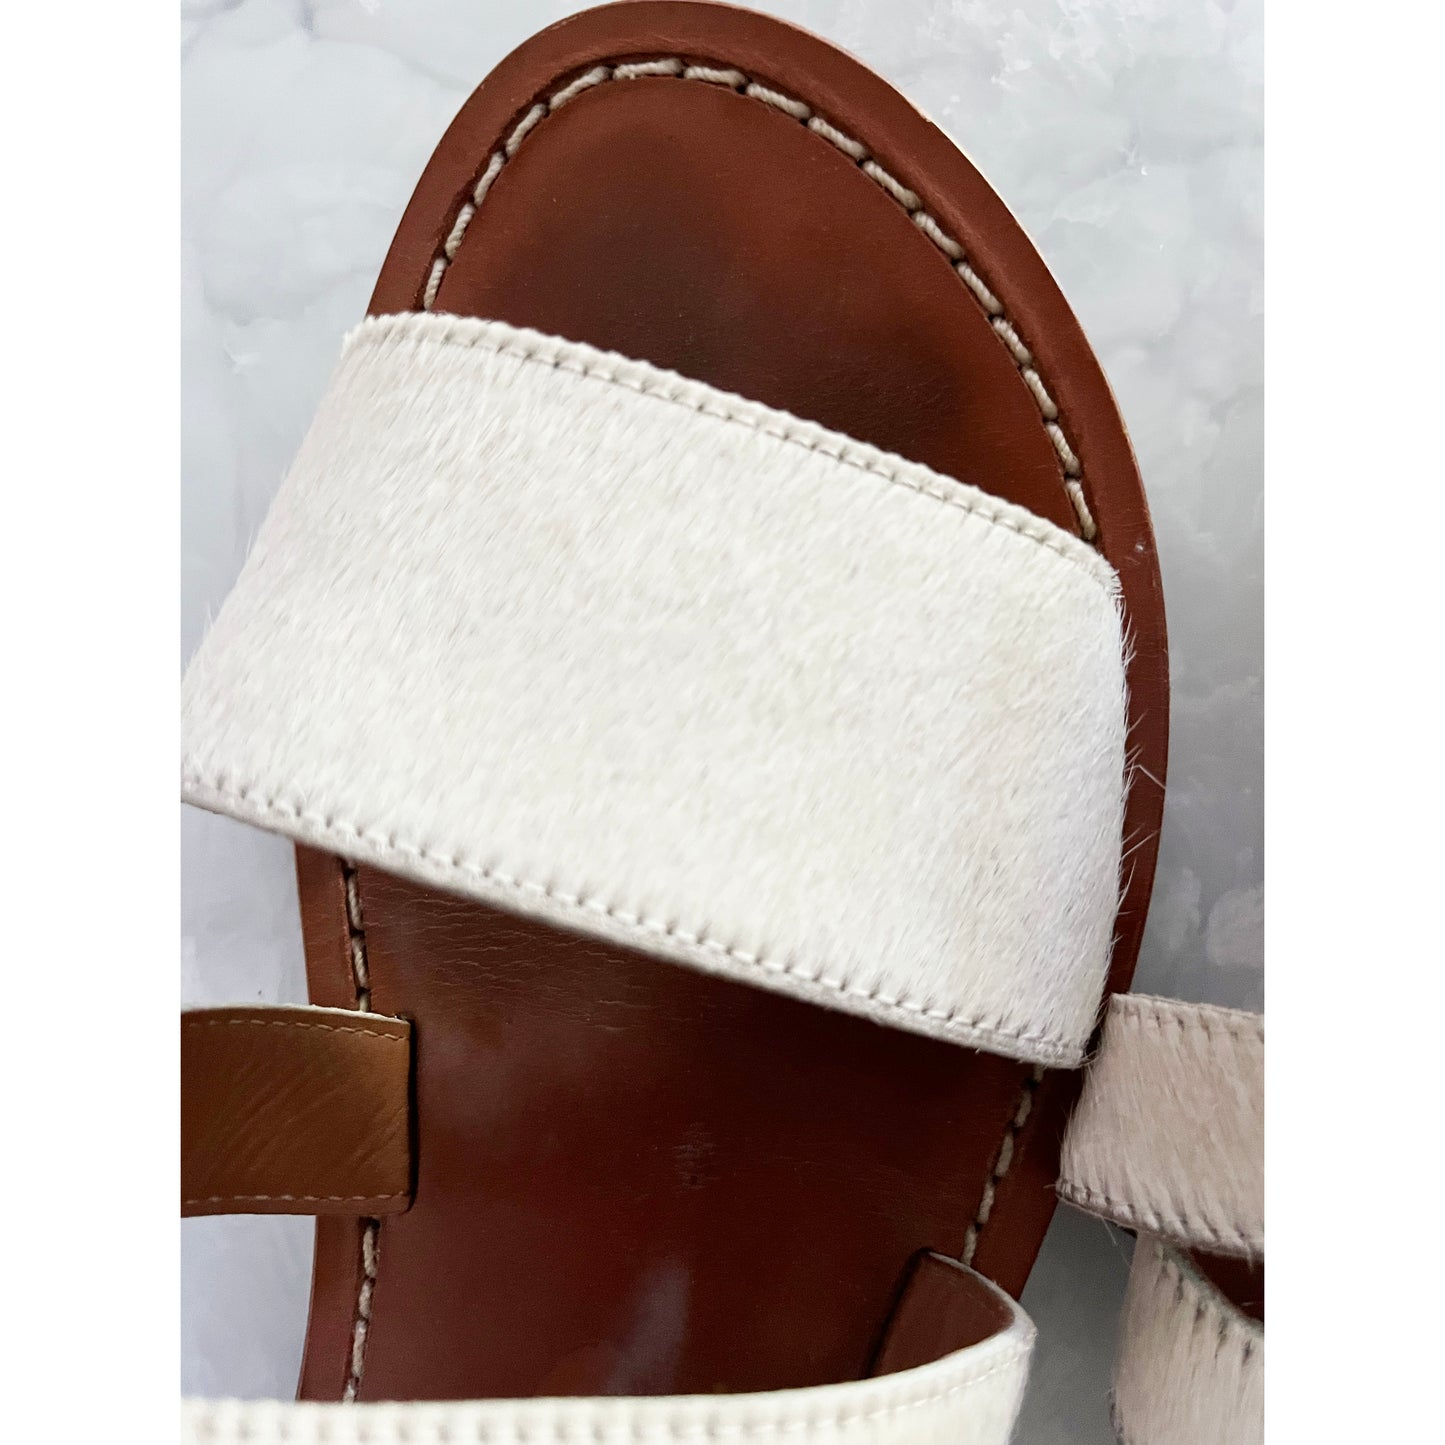 Marni Ivory Ponyhair Sandals, size 38